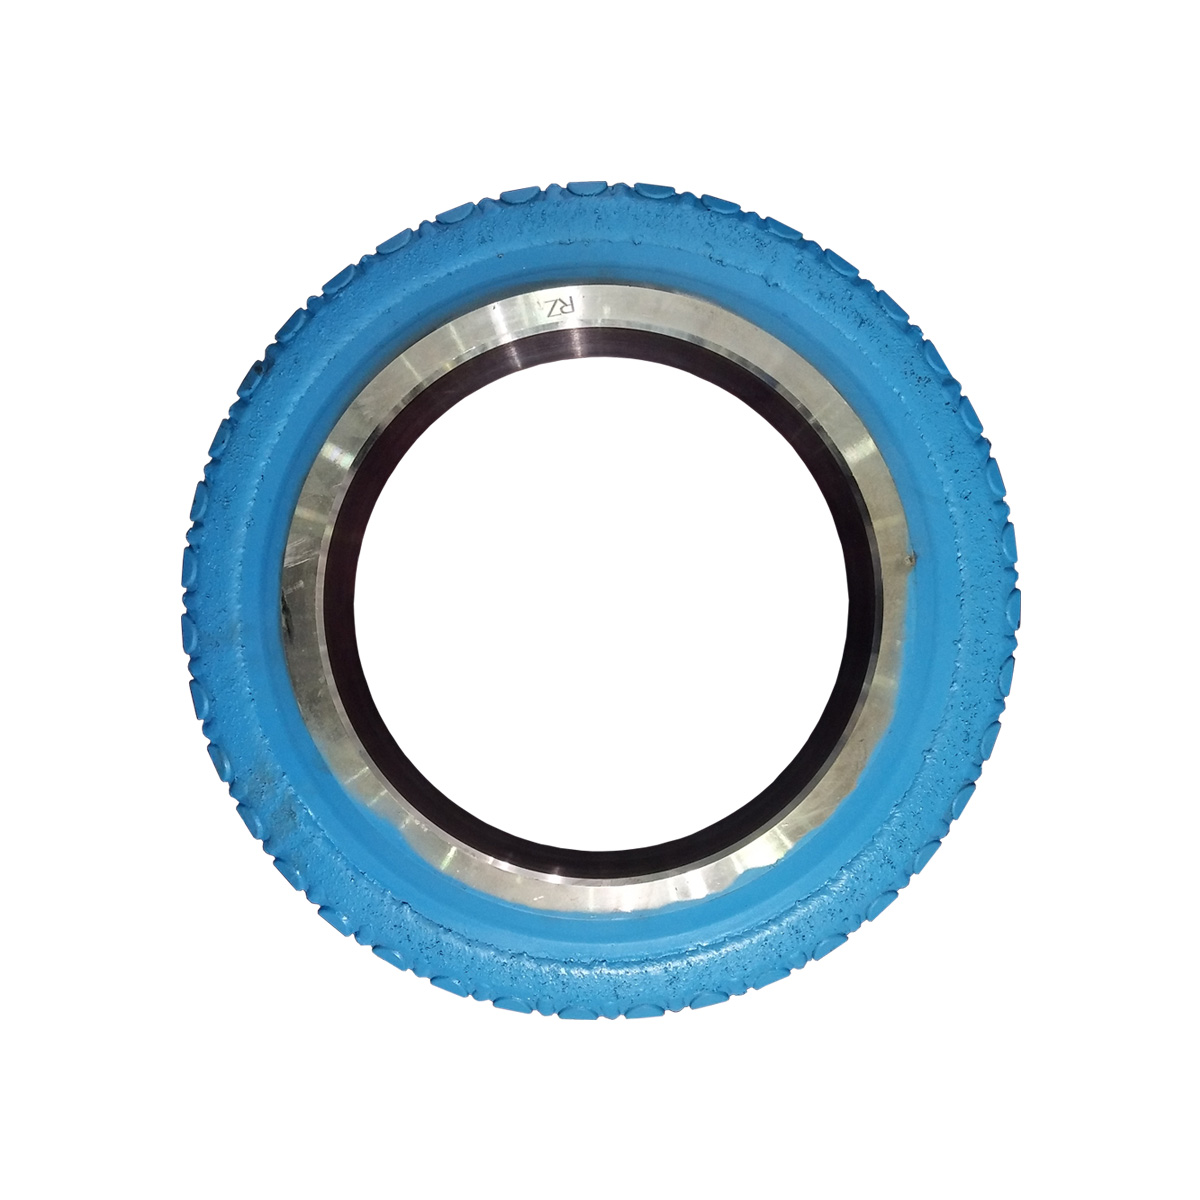 TBM roller disc cutter ring